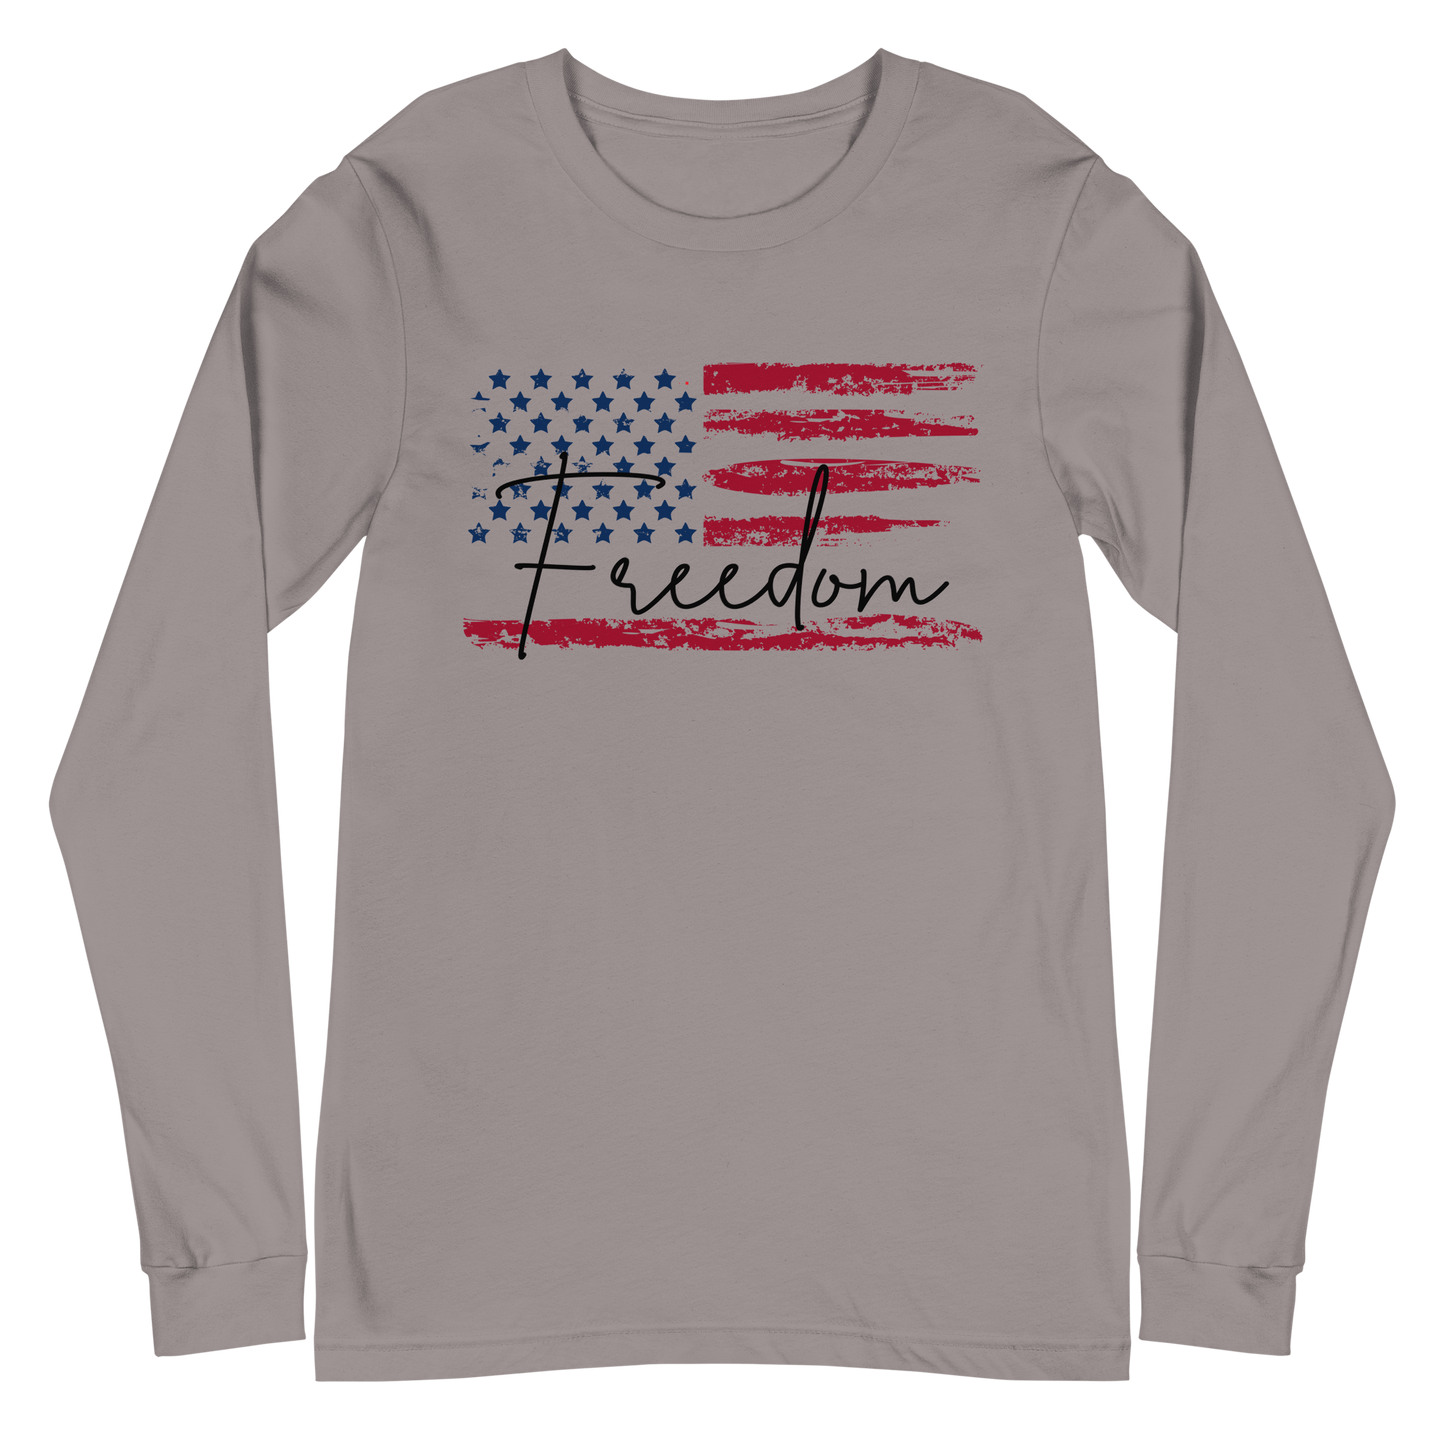 GU 'Freedom' Long Sleeve T-Shirt